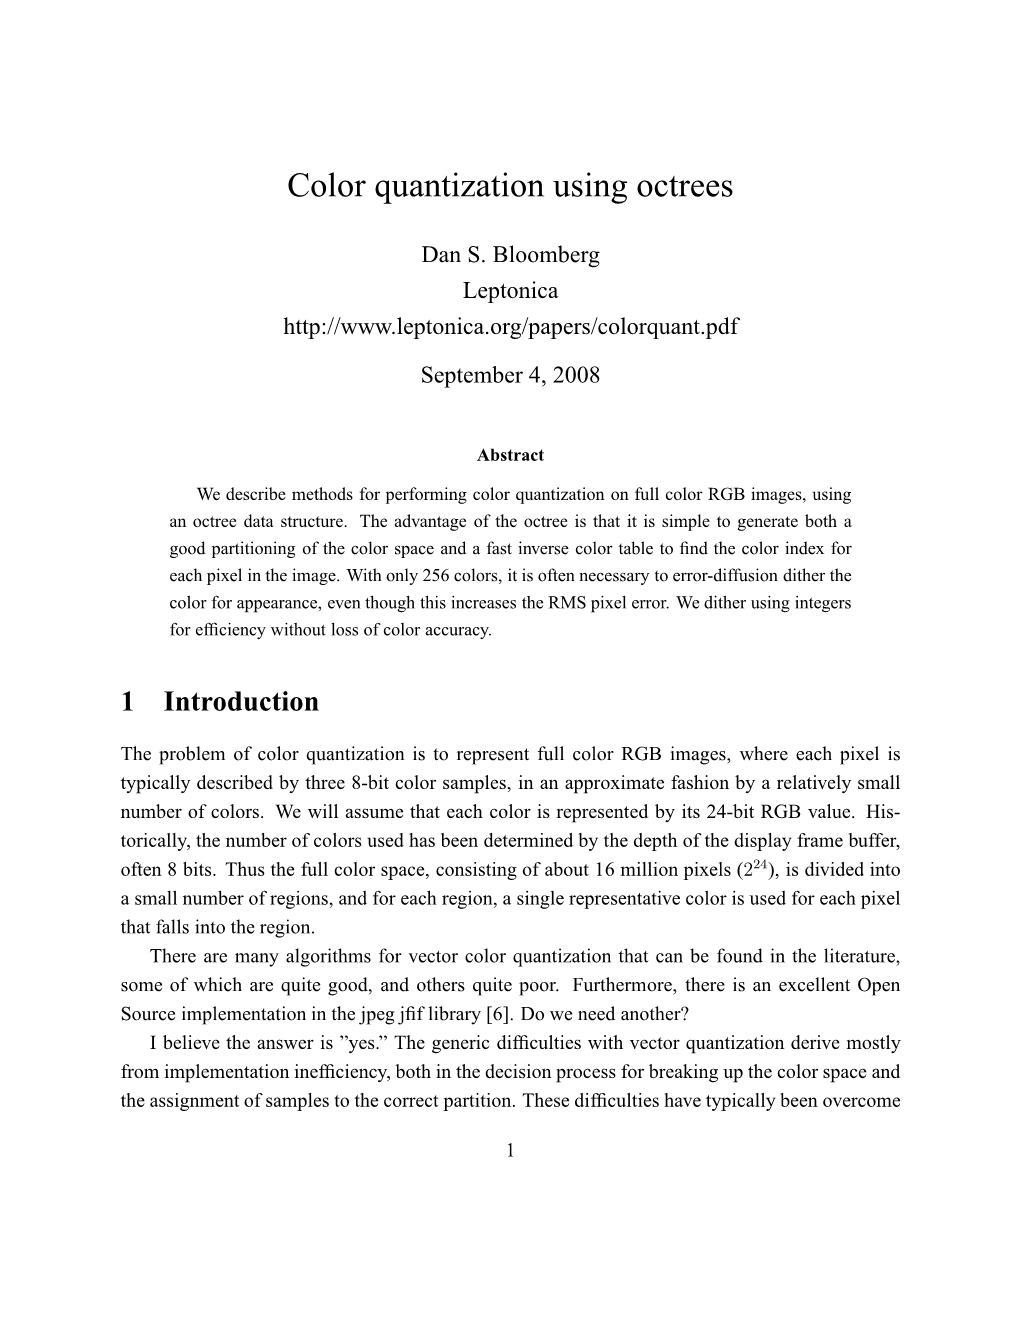 Color Quantization Using Octrees